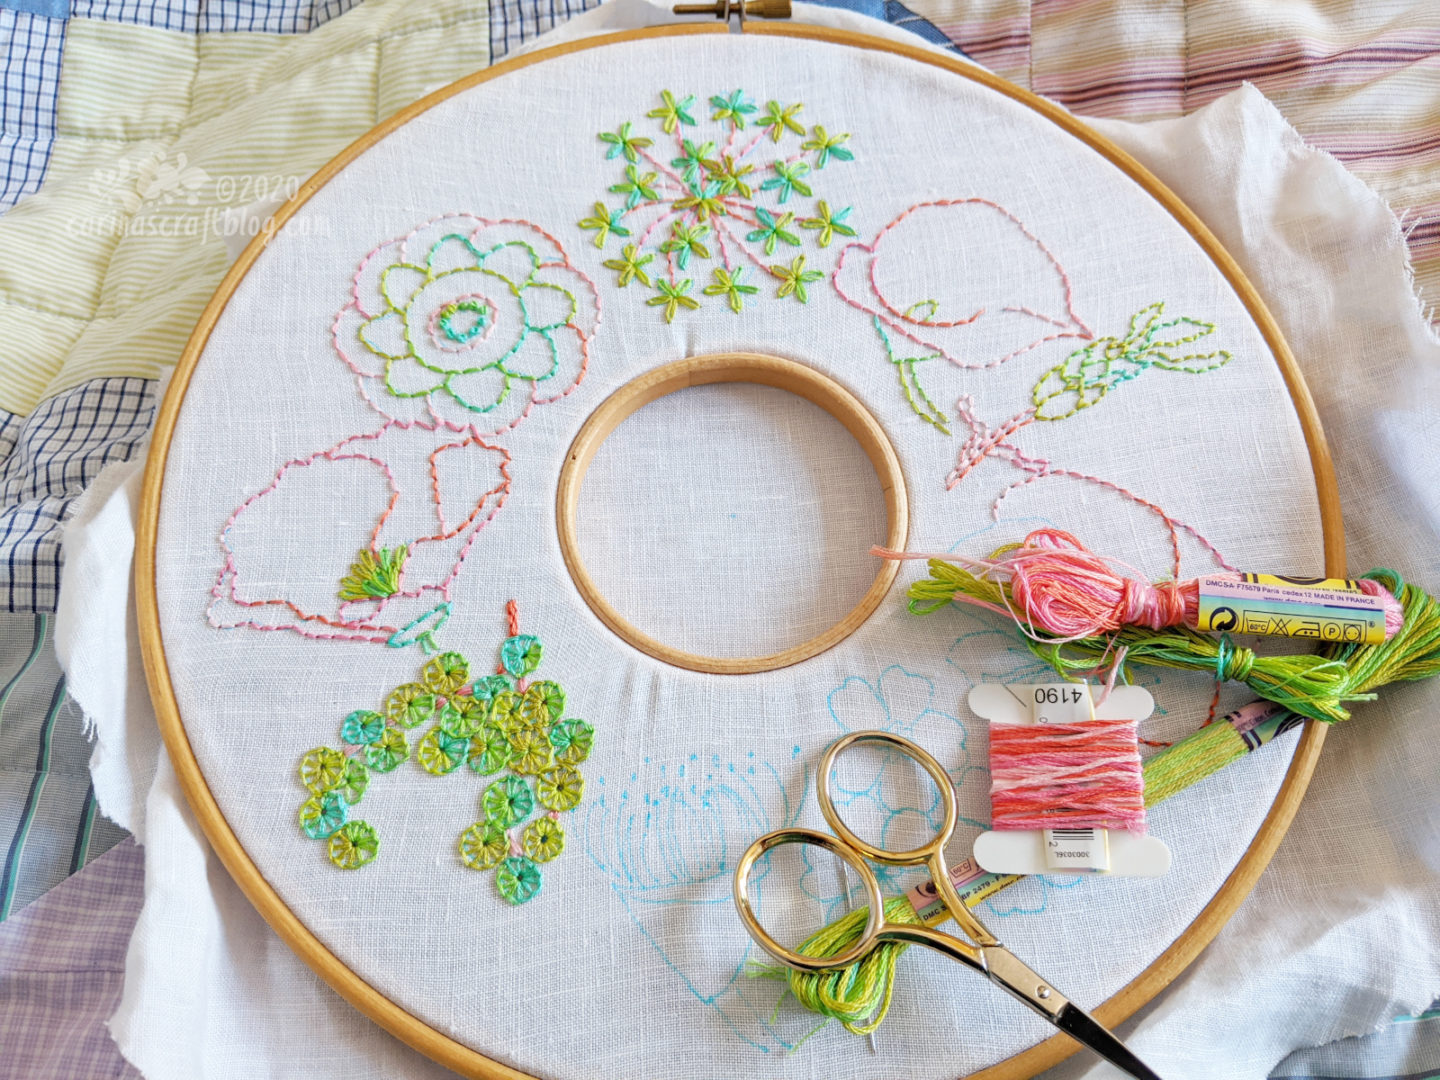 Maybroidery WiP – Carina's Craftblog